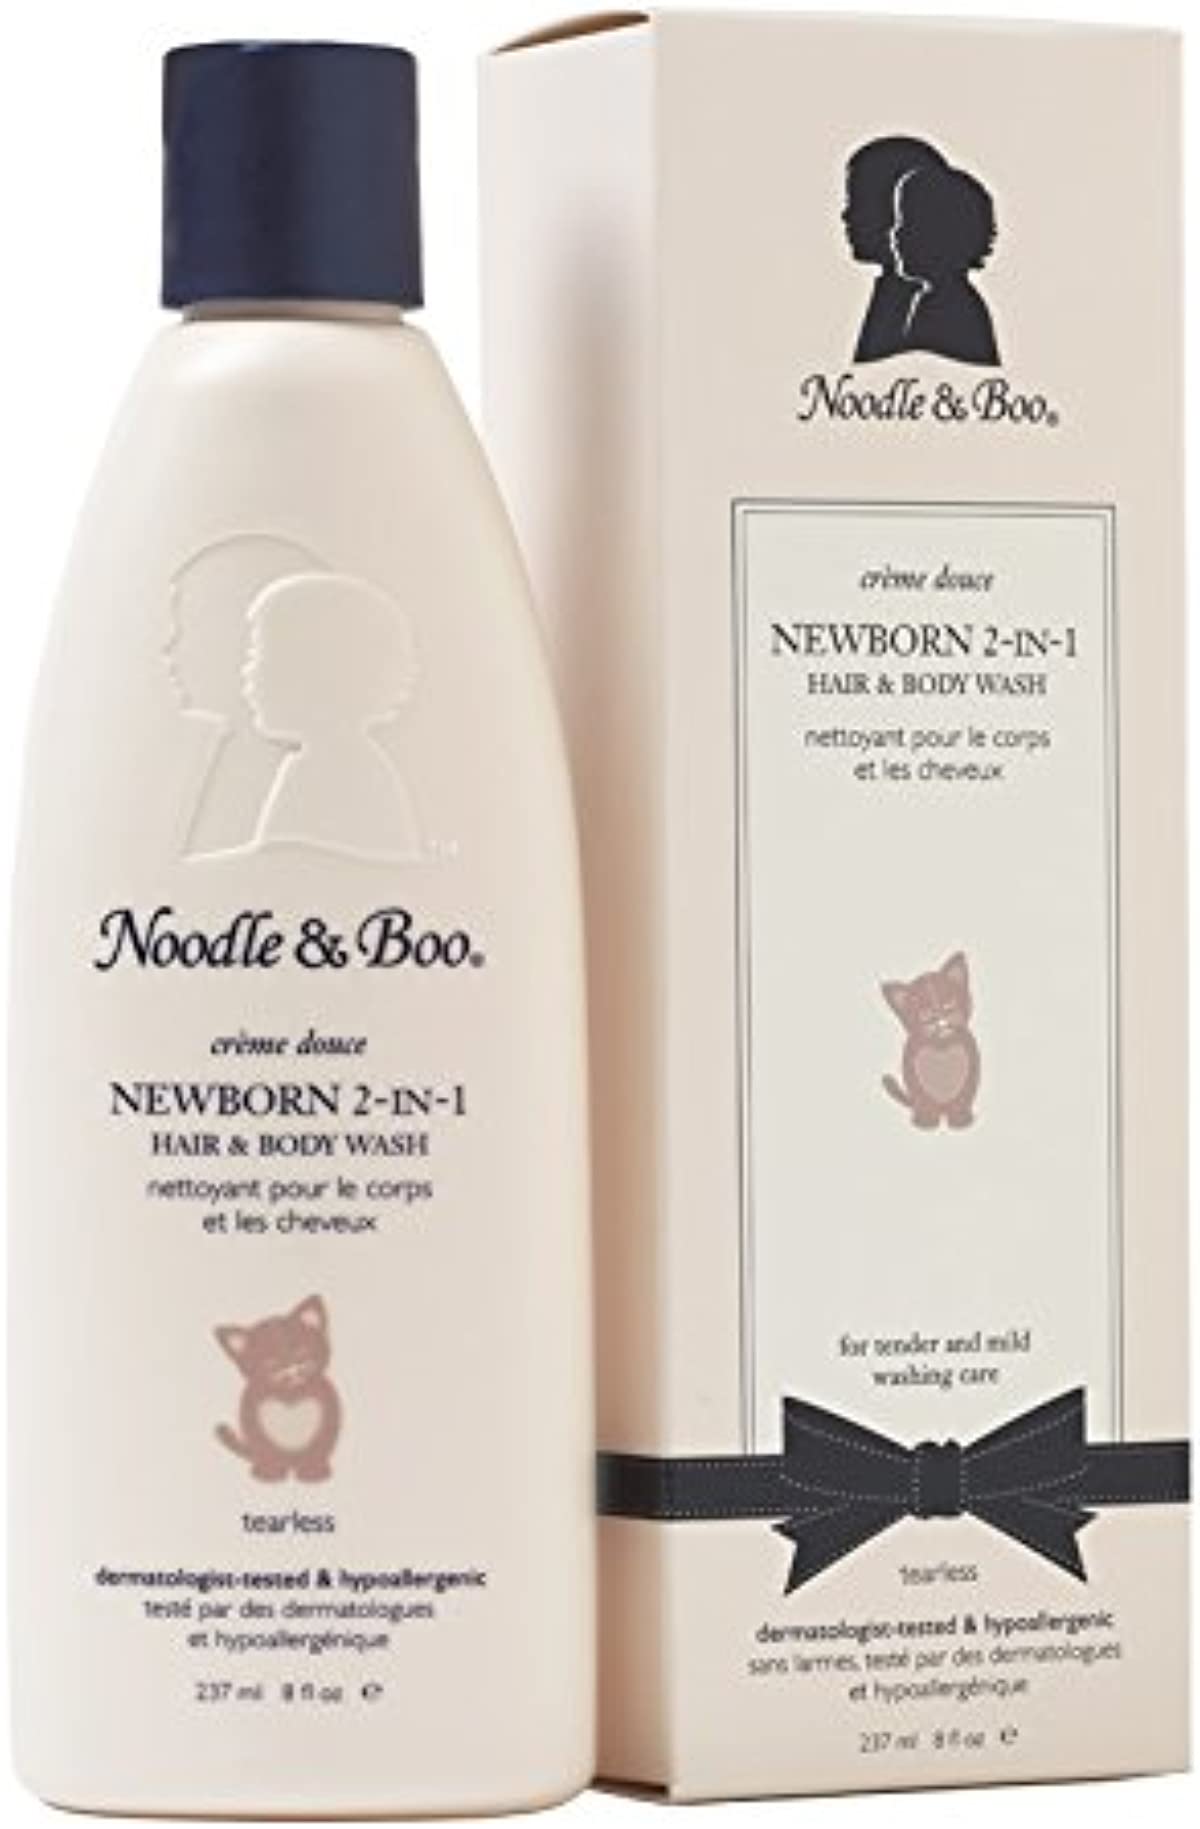 Noodle & Boo Newborn Daily Essentials Gift Set